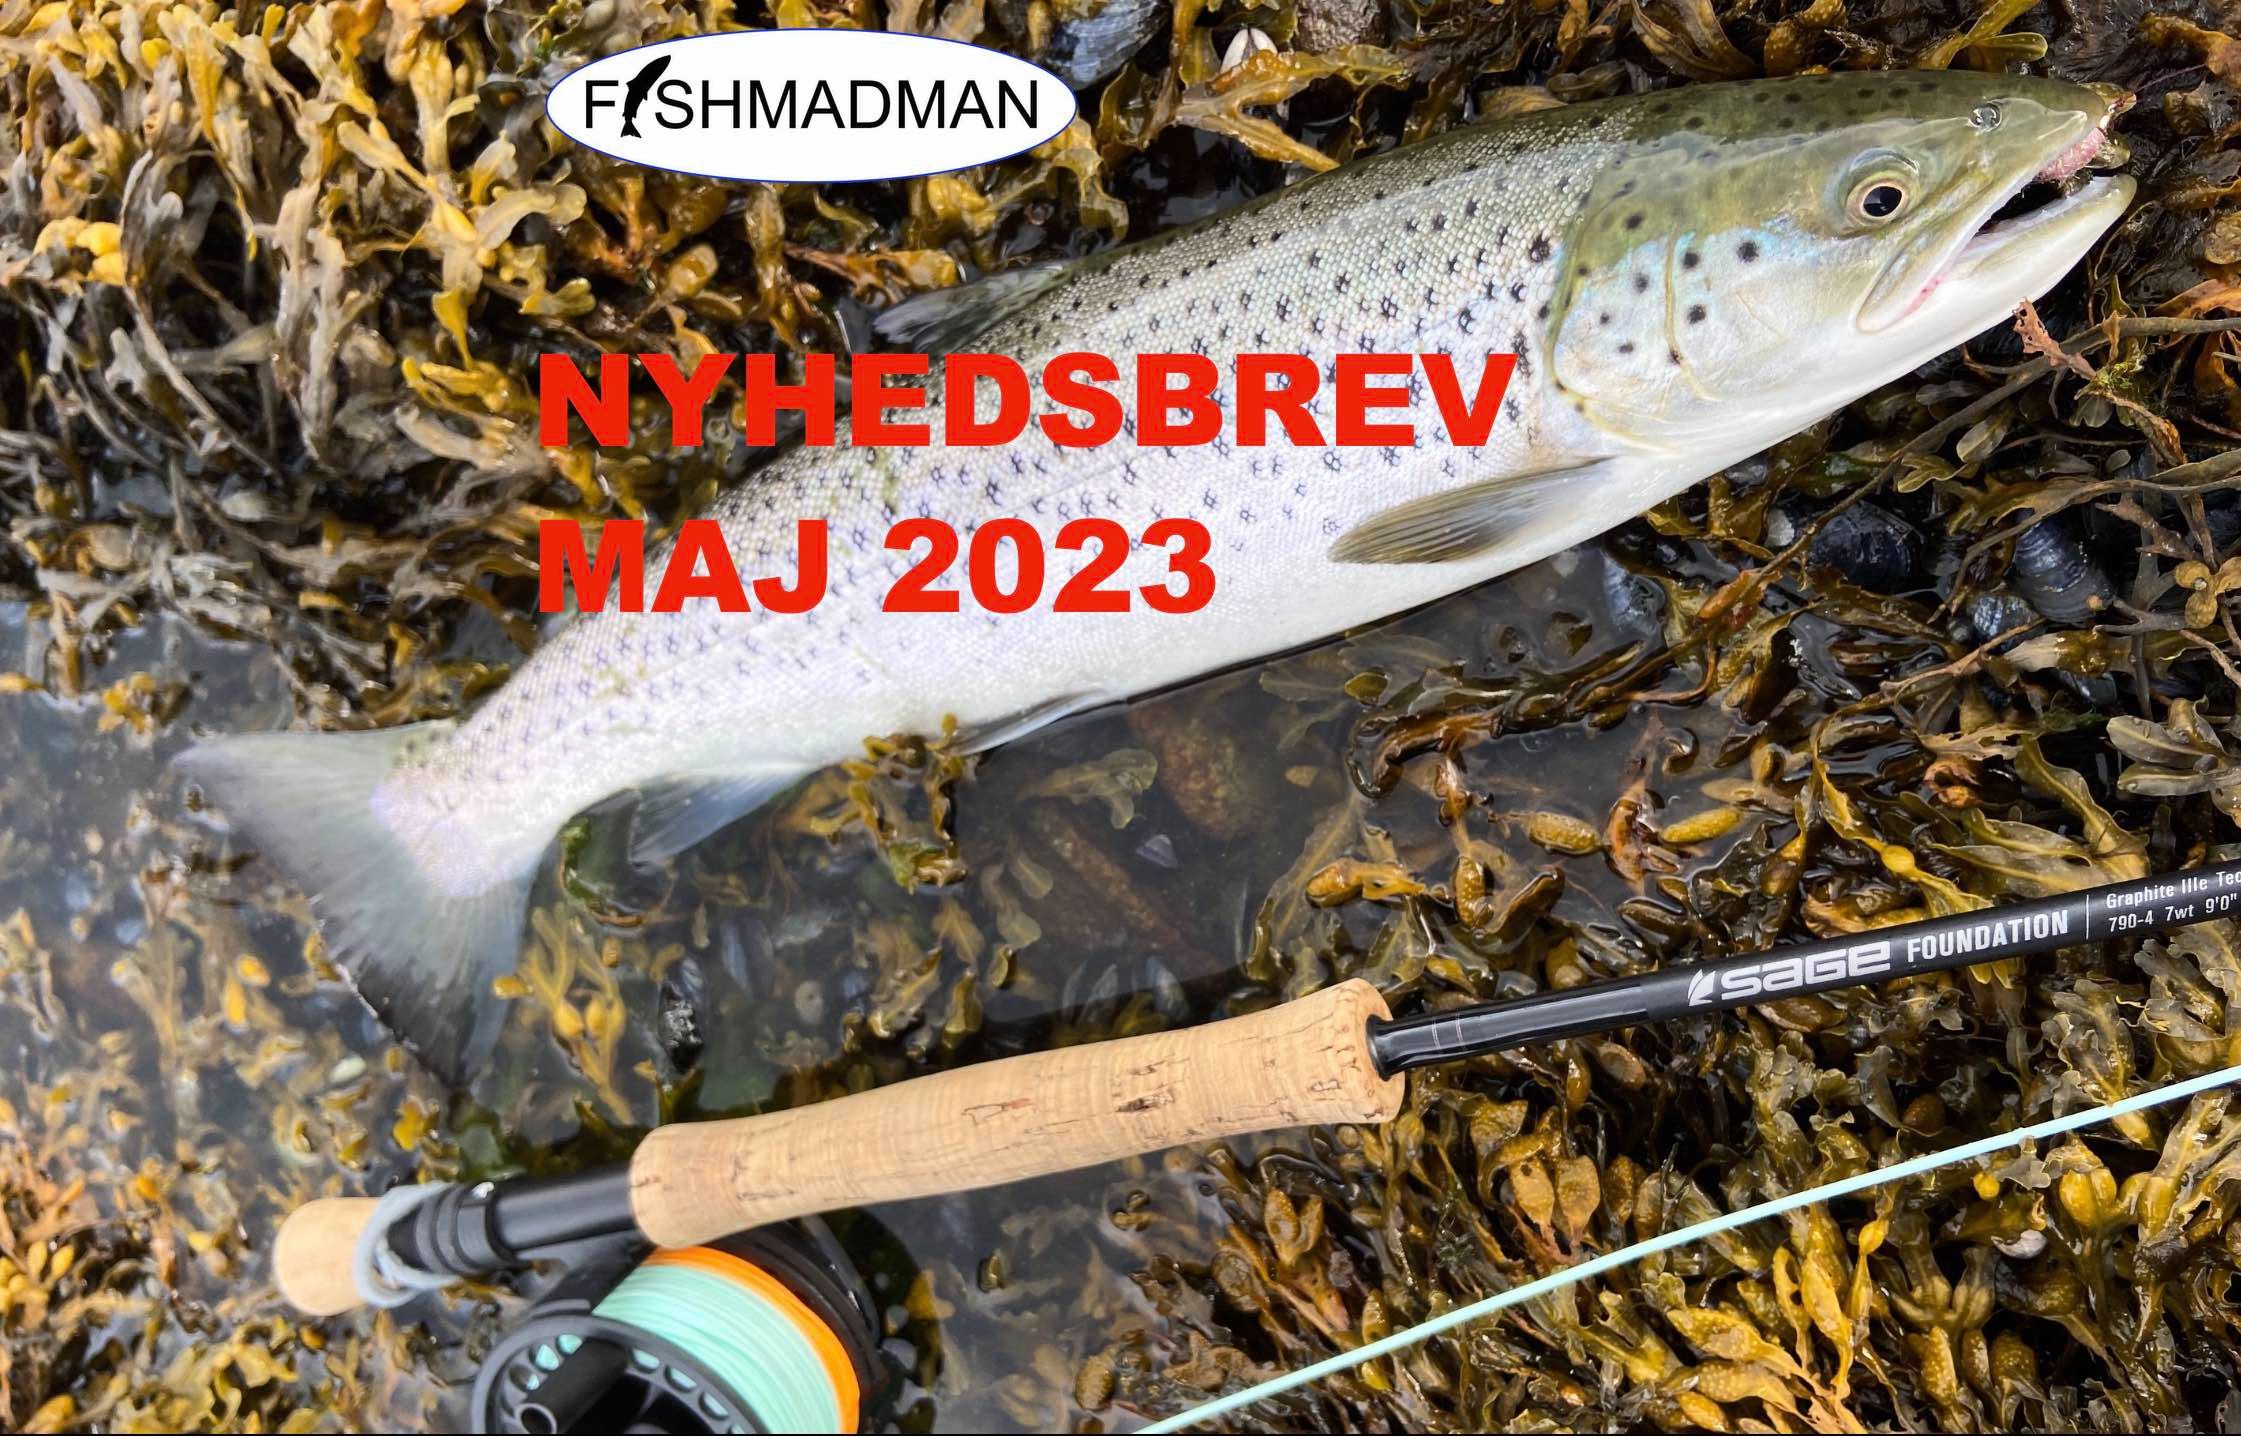 Fishmadman Nyhedsbrev maj 2023